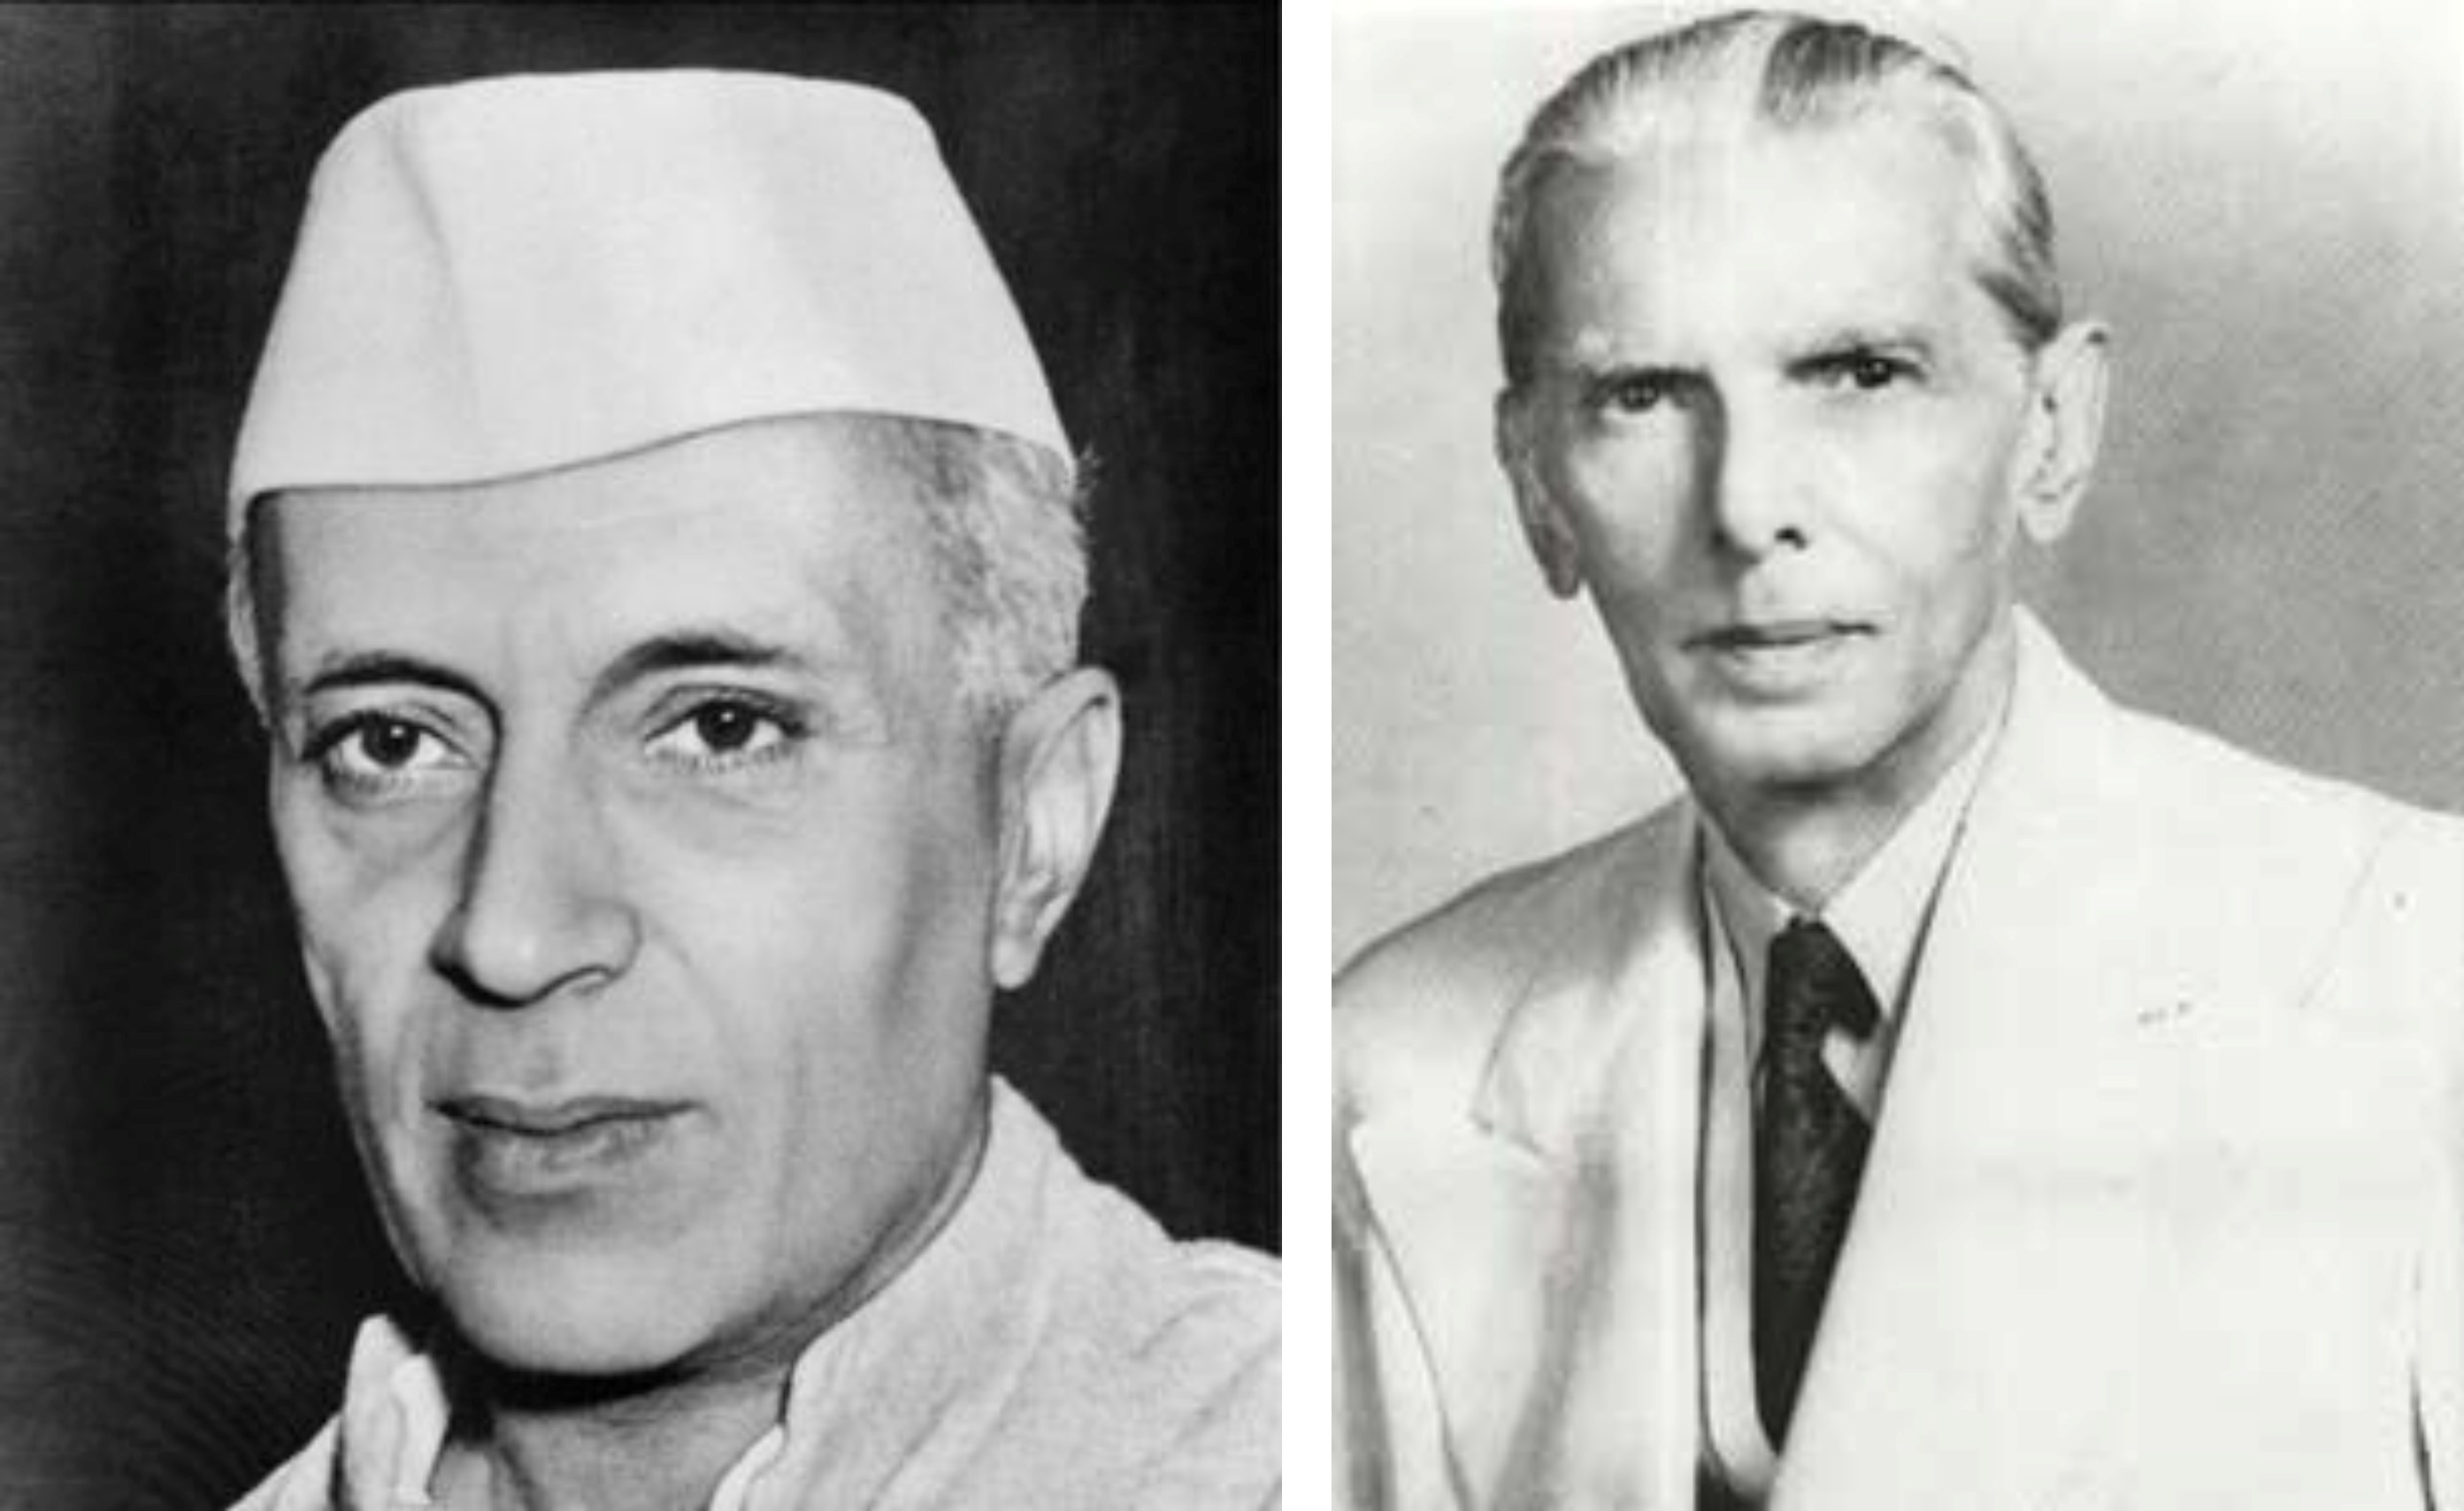 On the left, Jawaharlal Nehru. On the right, Muhammad Ali Jinnah.